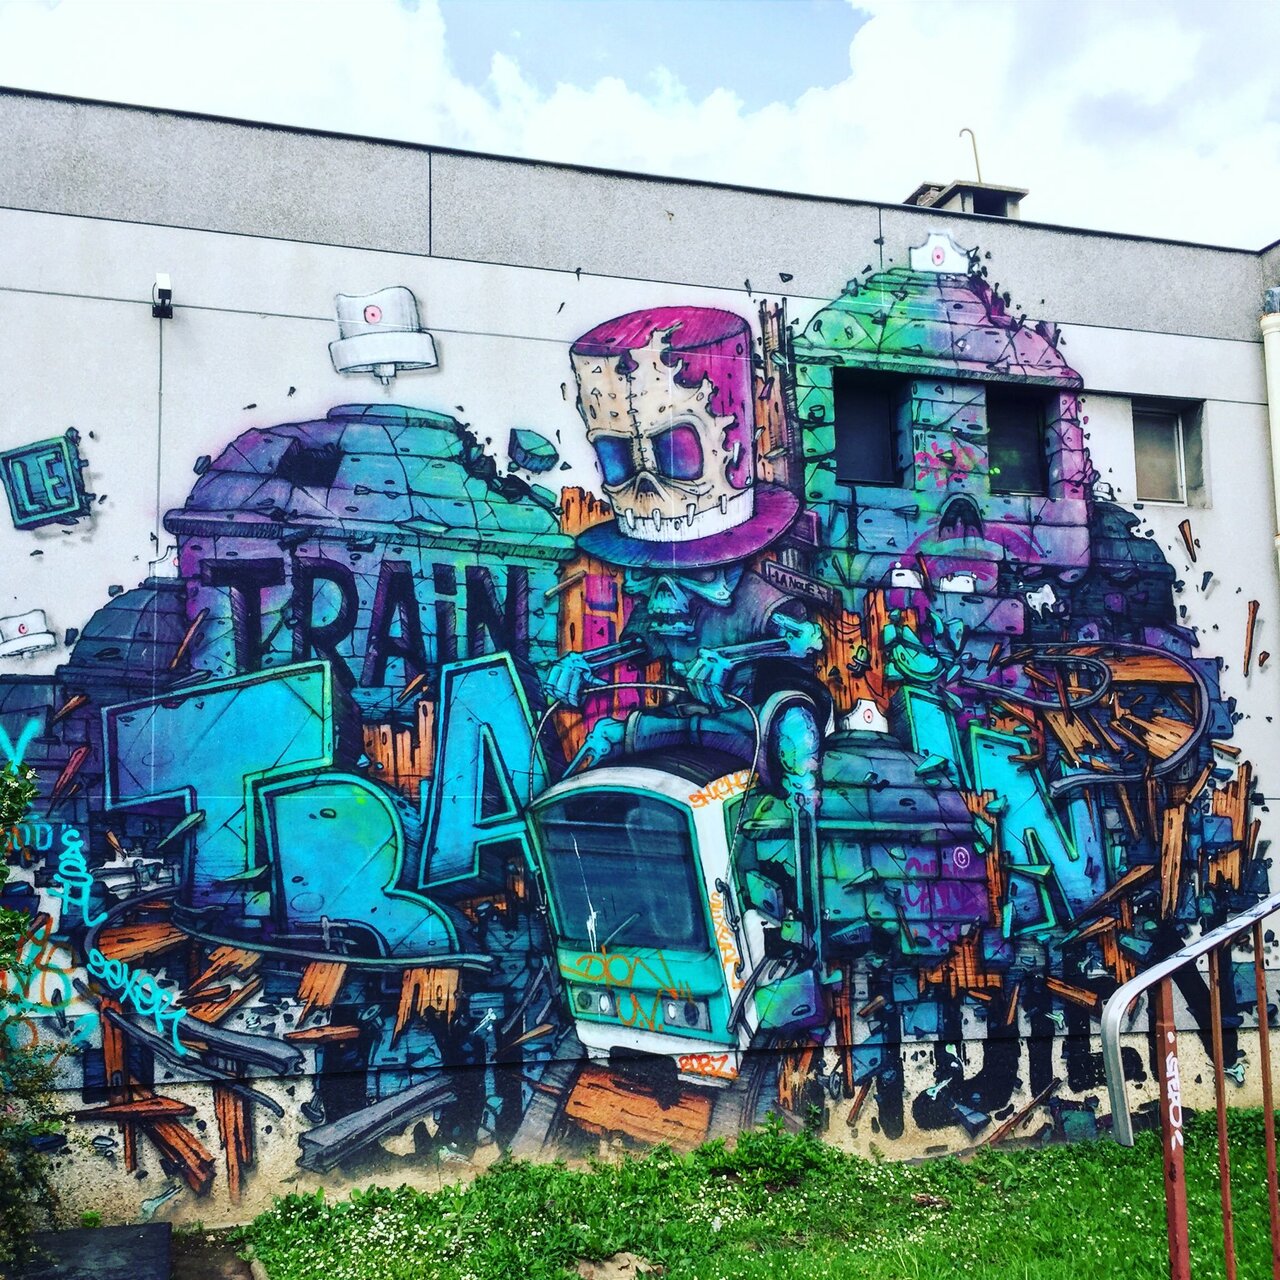 Le train  by #canniballetters #voodoo #cannibalism #streetart #graffiti #graff https://t.co/NQI5I6ZL3O